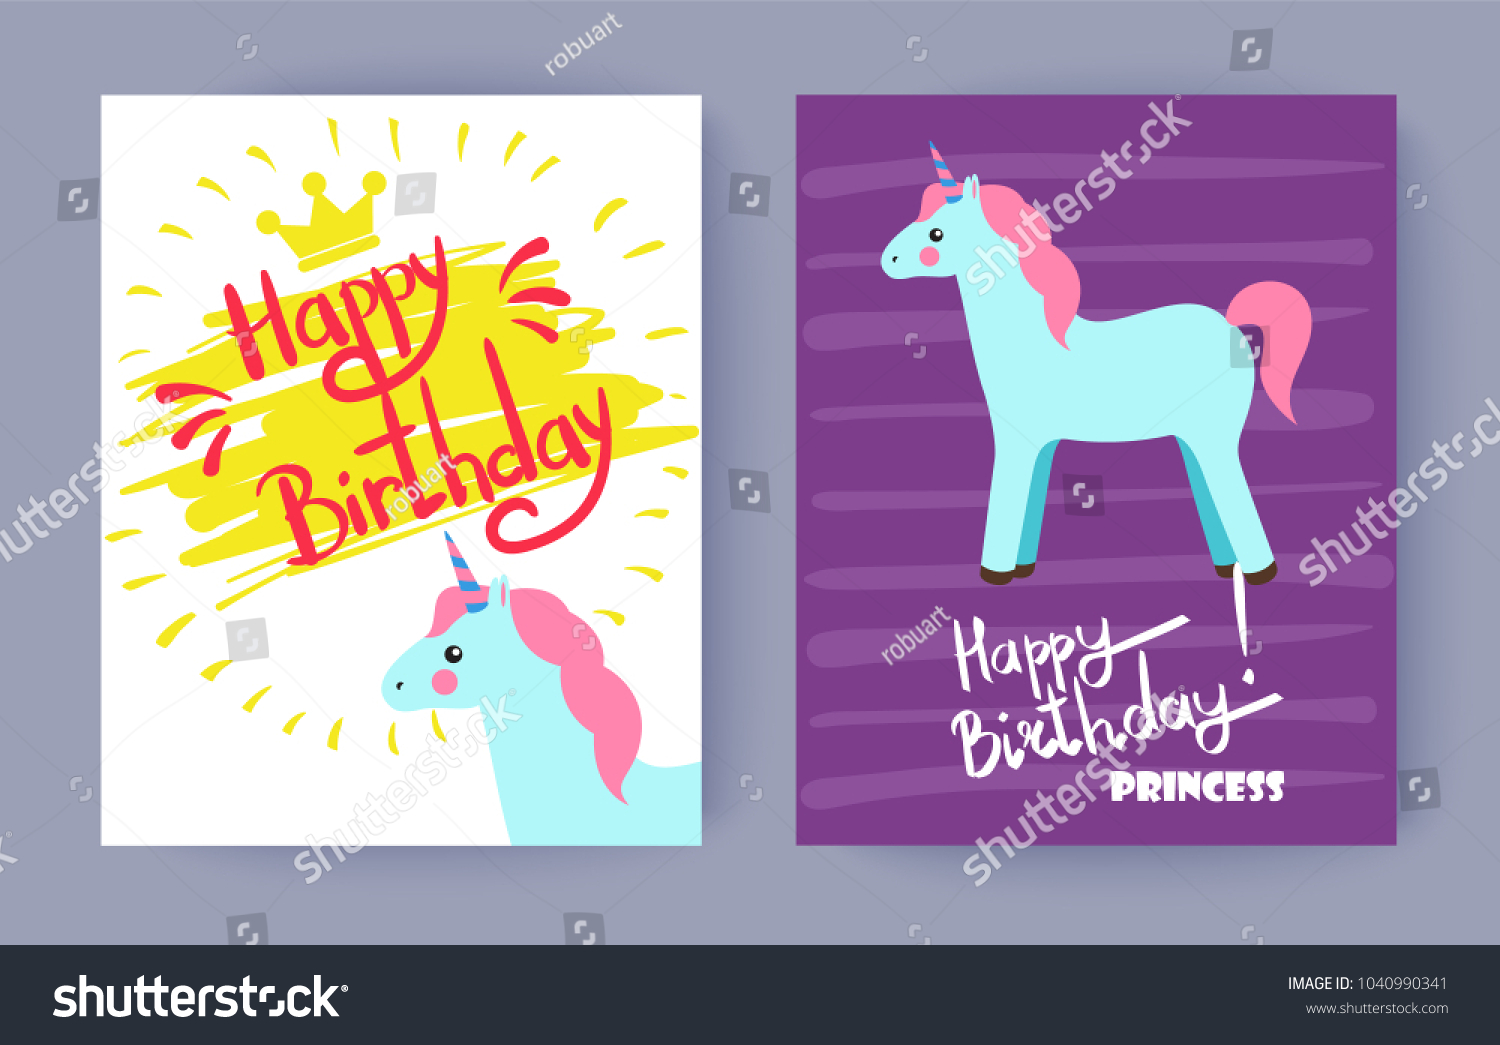 Happy Birthday Princess Cute Celebration Banner Stock Vector Royalty Free 1040990341 9547